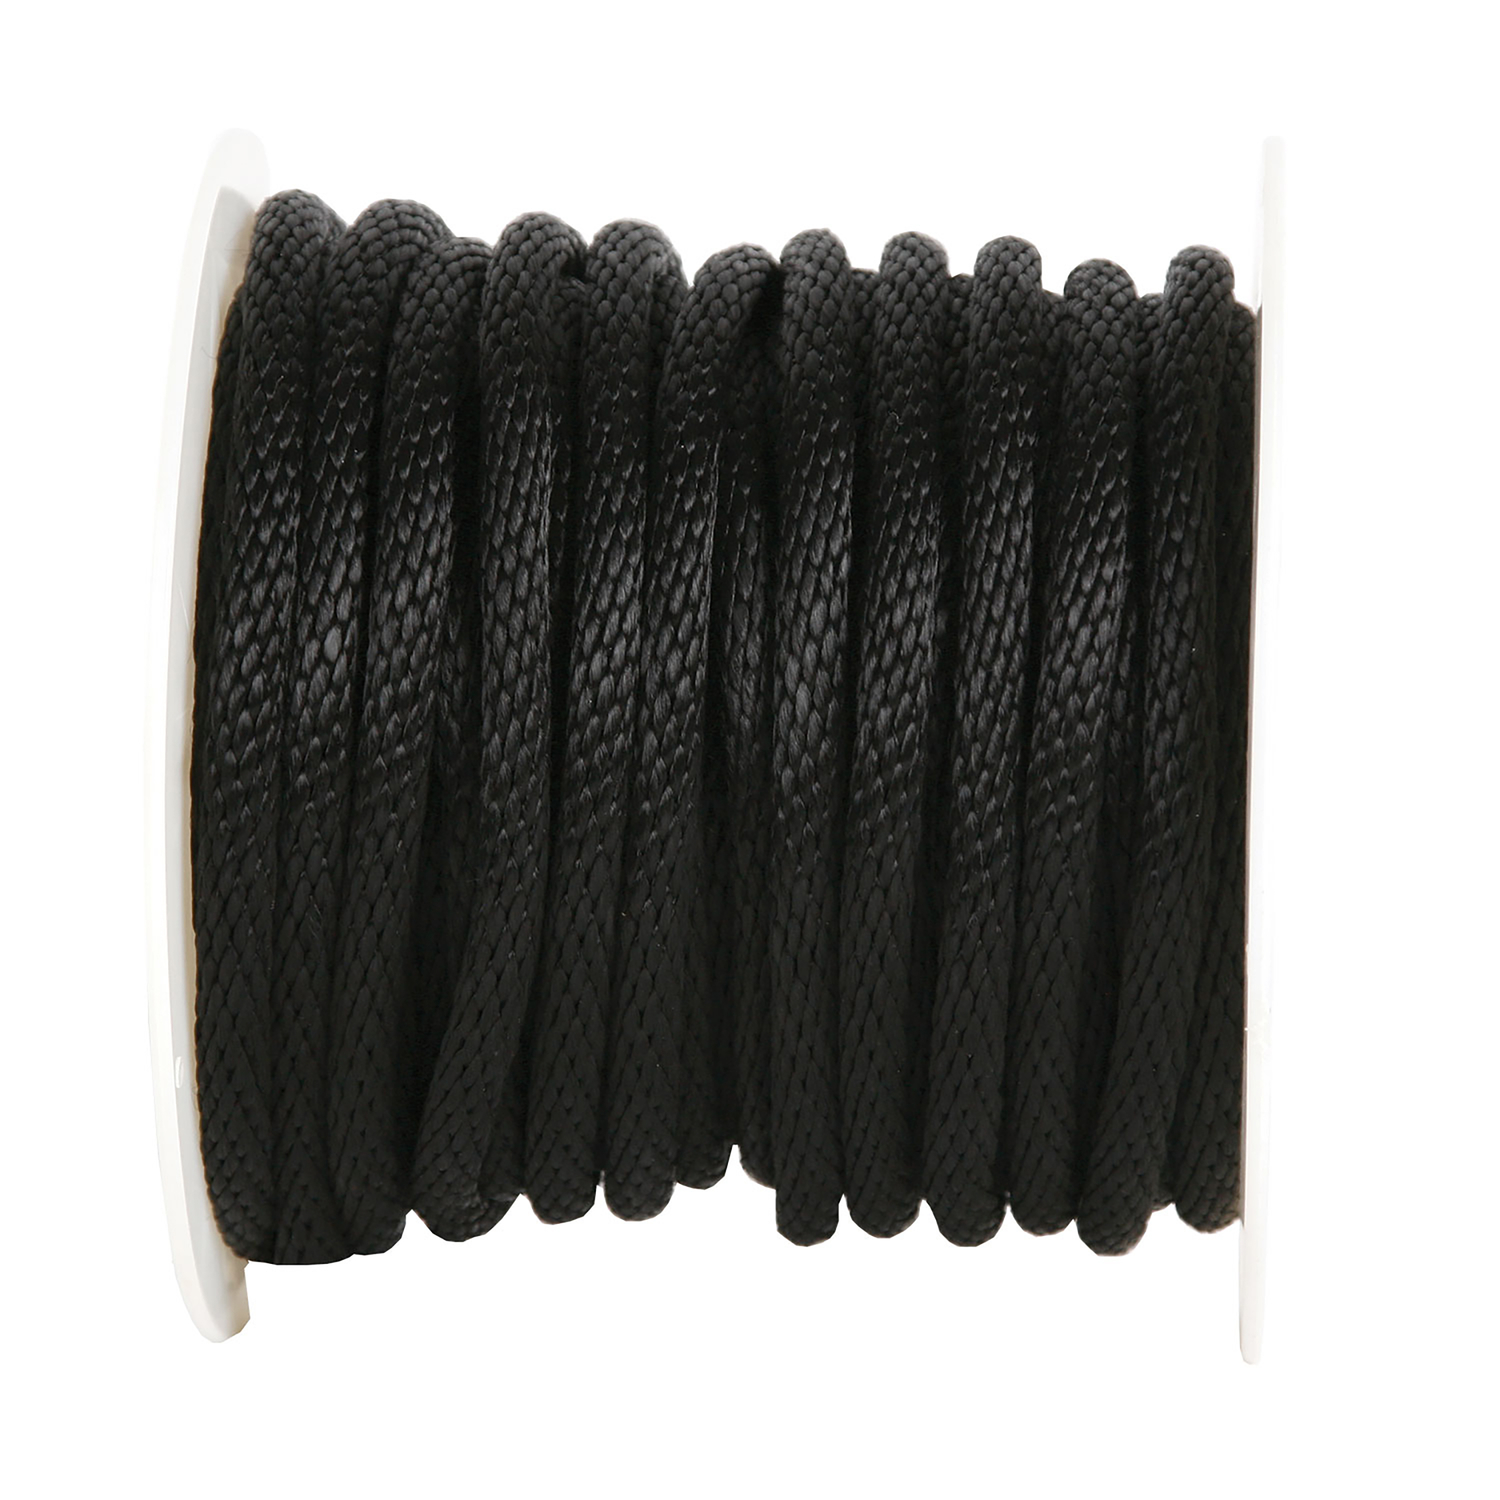 Wellington Cordage P7240S0200BKFR 5/8x200 Blk Braid Rope, Black